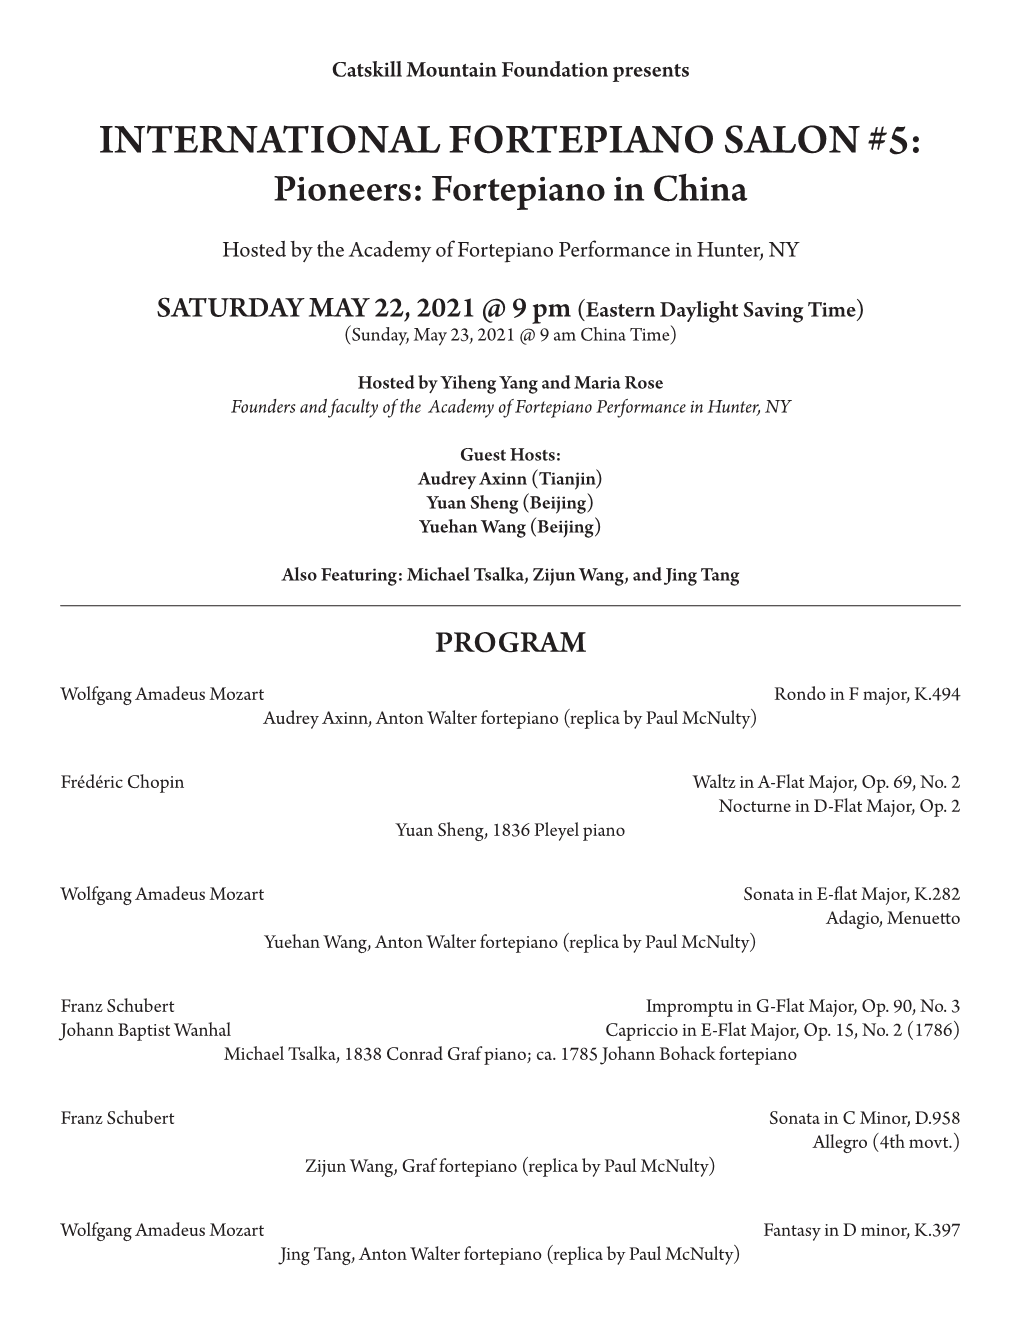 INTERNATIONAL FORTEPIANO SALON #5: Pioneers: Fortepiano in China